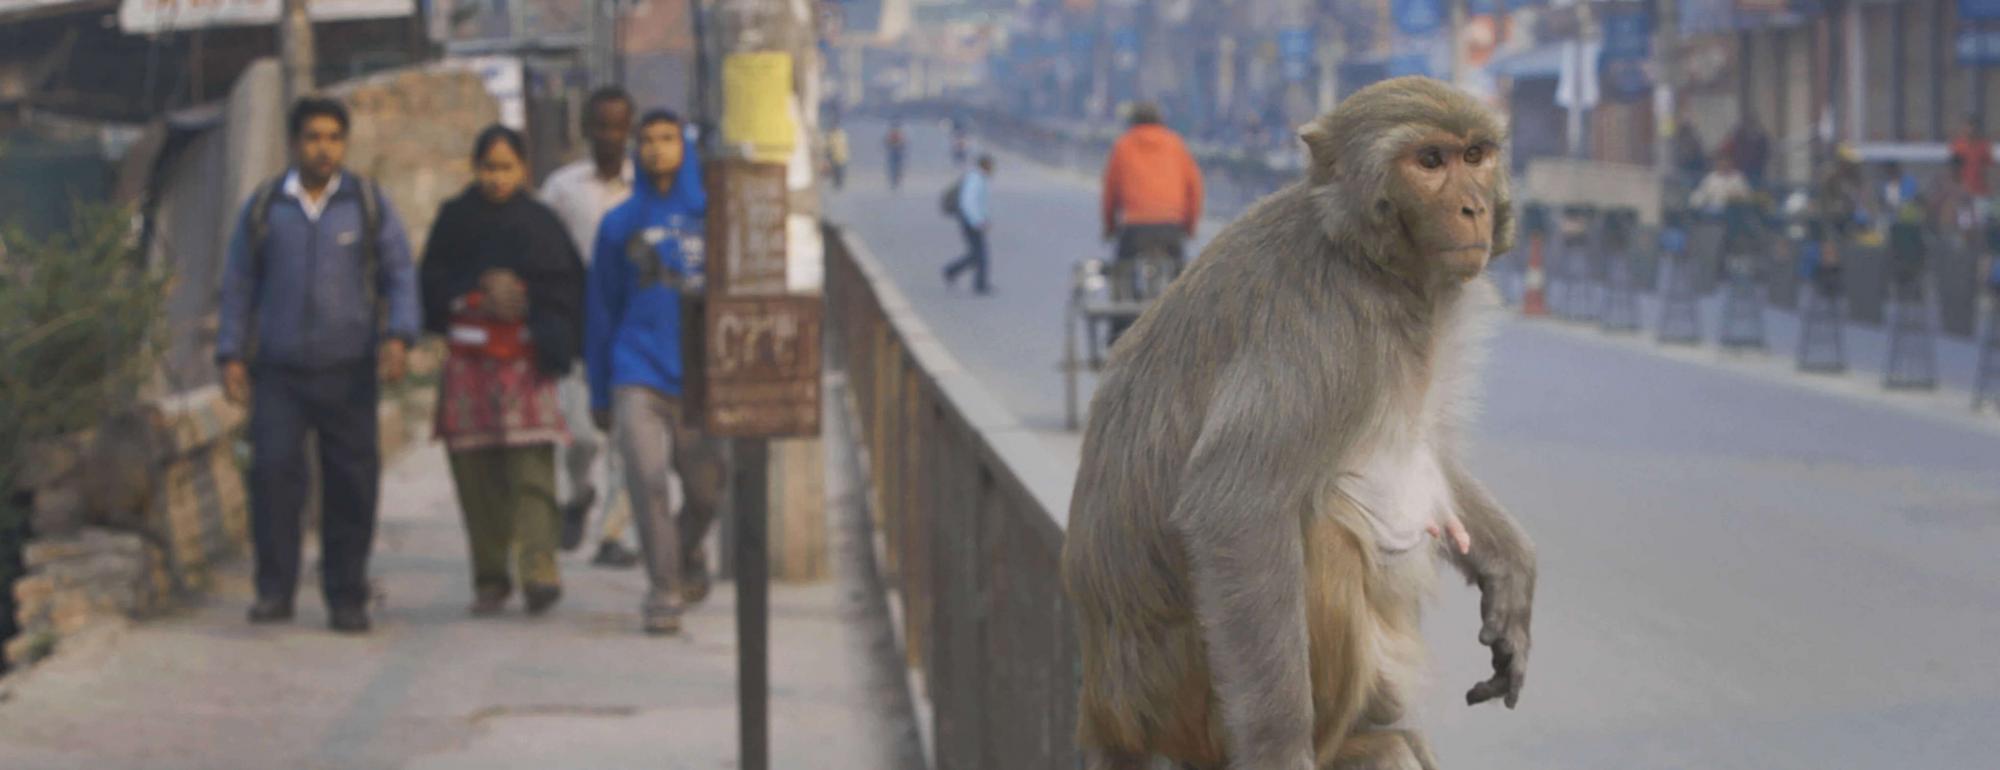 monkey on street